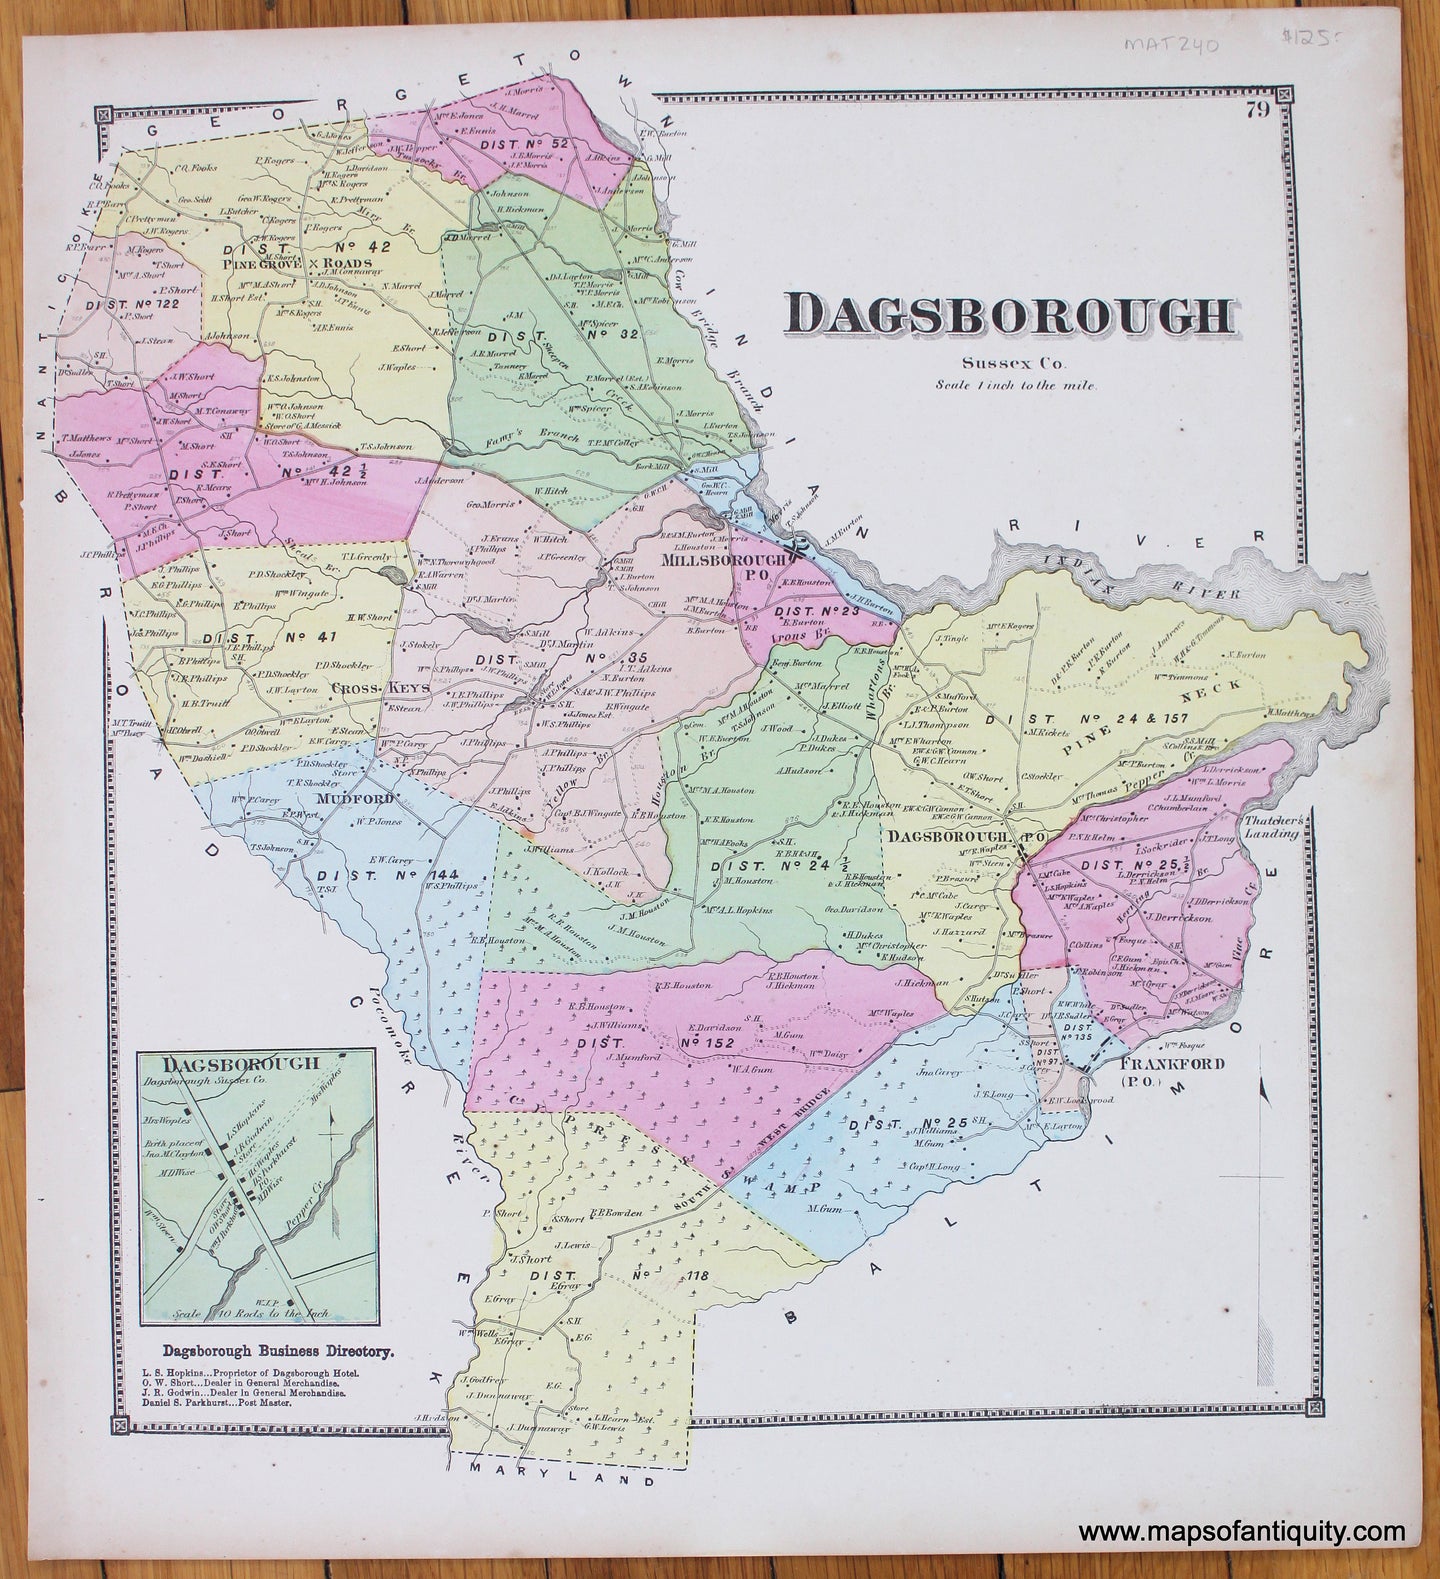 Dagsborough-Antique-Map-1868-Beers-1860s-1800s-19th-century-Maps-of-Antiquity